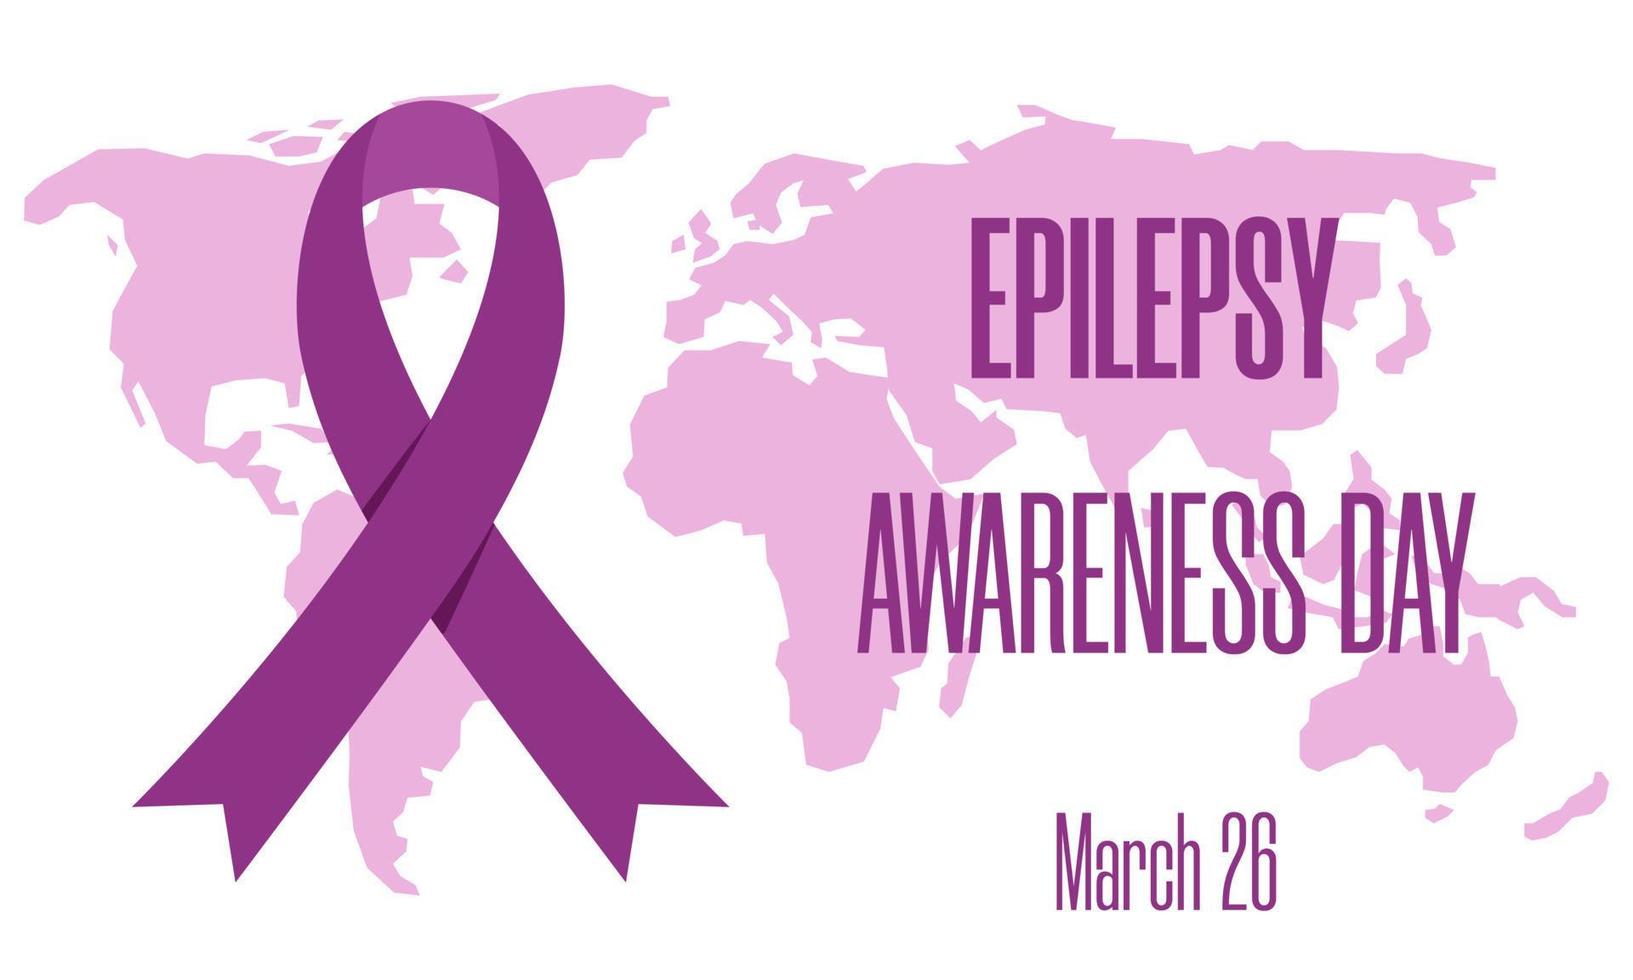 concepto de epilepsia conciencia día, púrpura día en marzo 26 vector ilustración de mundo mapa con conciencia cinta y texto para social póster, bandera, tarjeta, volantes